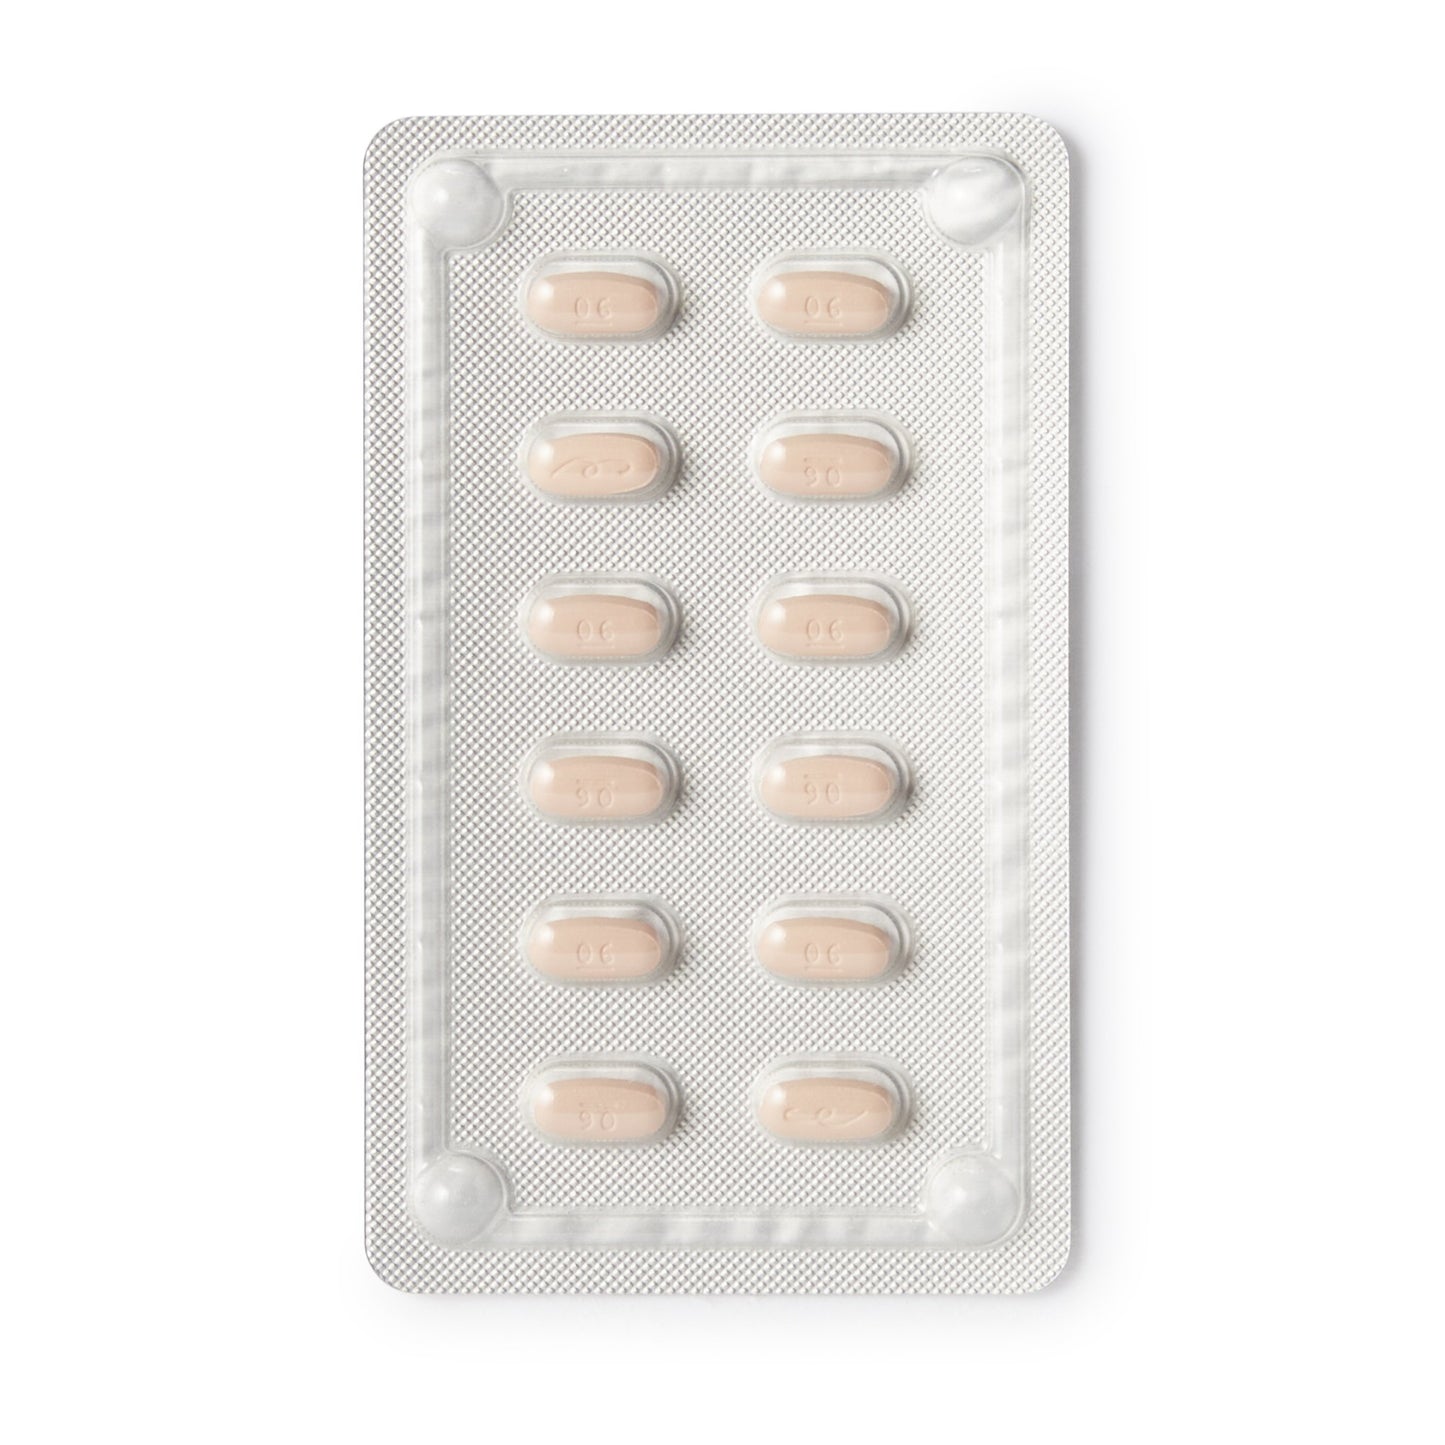 Allegra® Fexofenadine HCl Allergy Relief, 60 mg, 12 ct